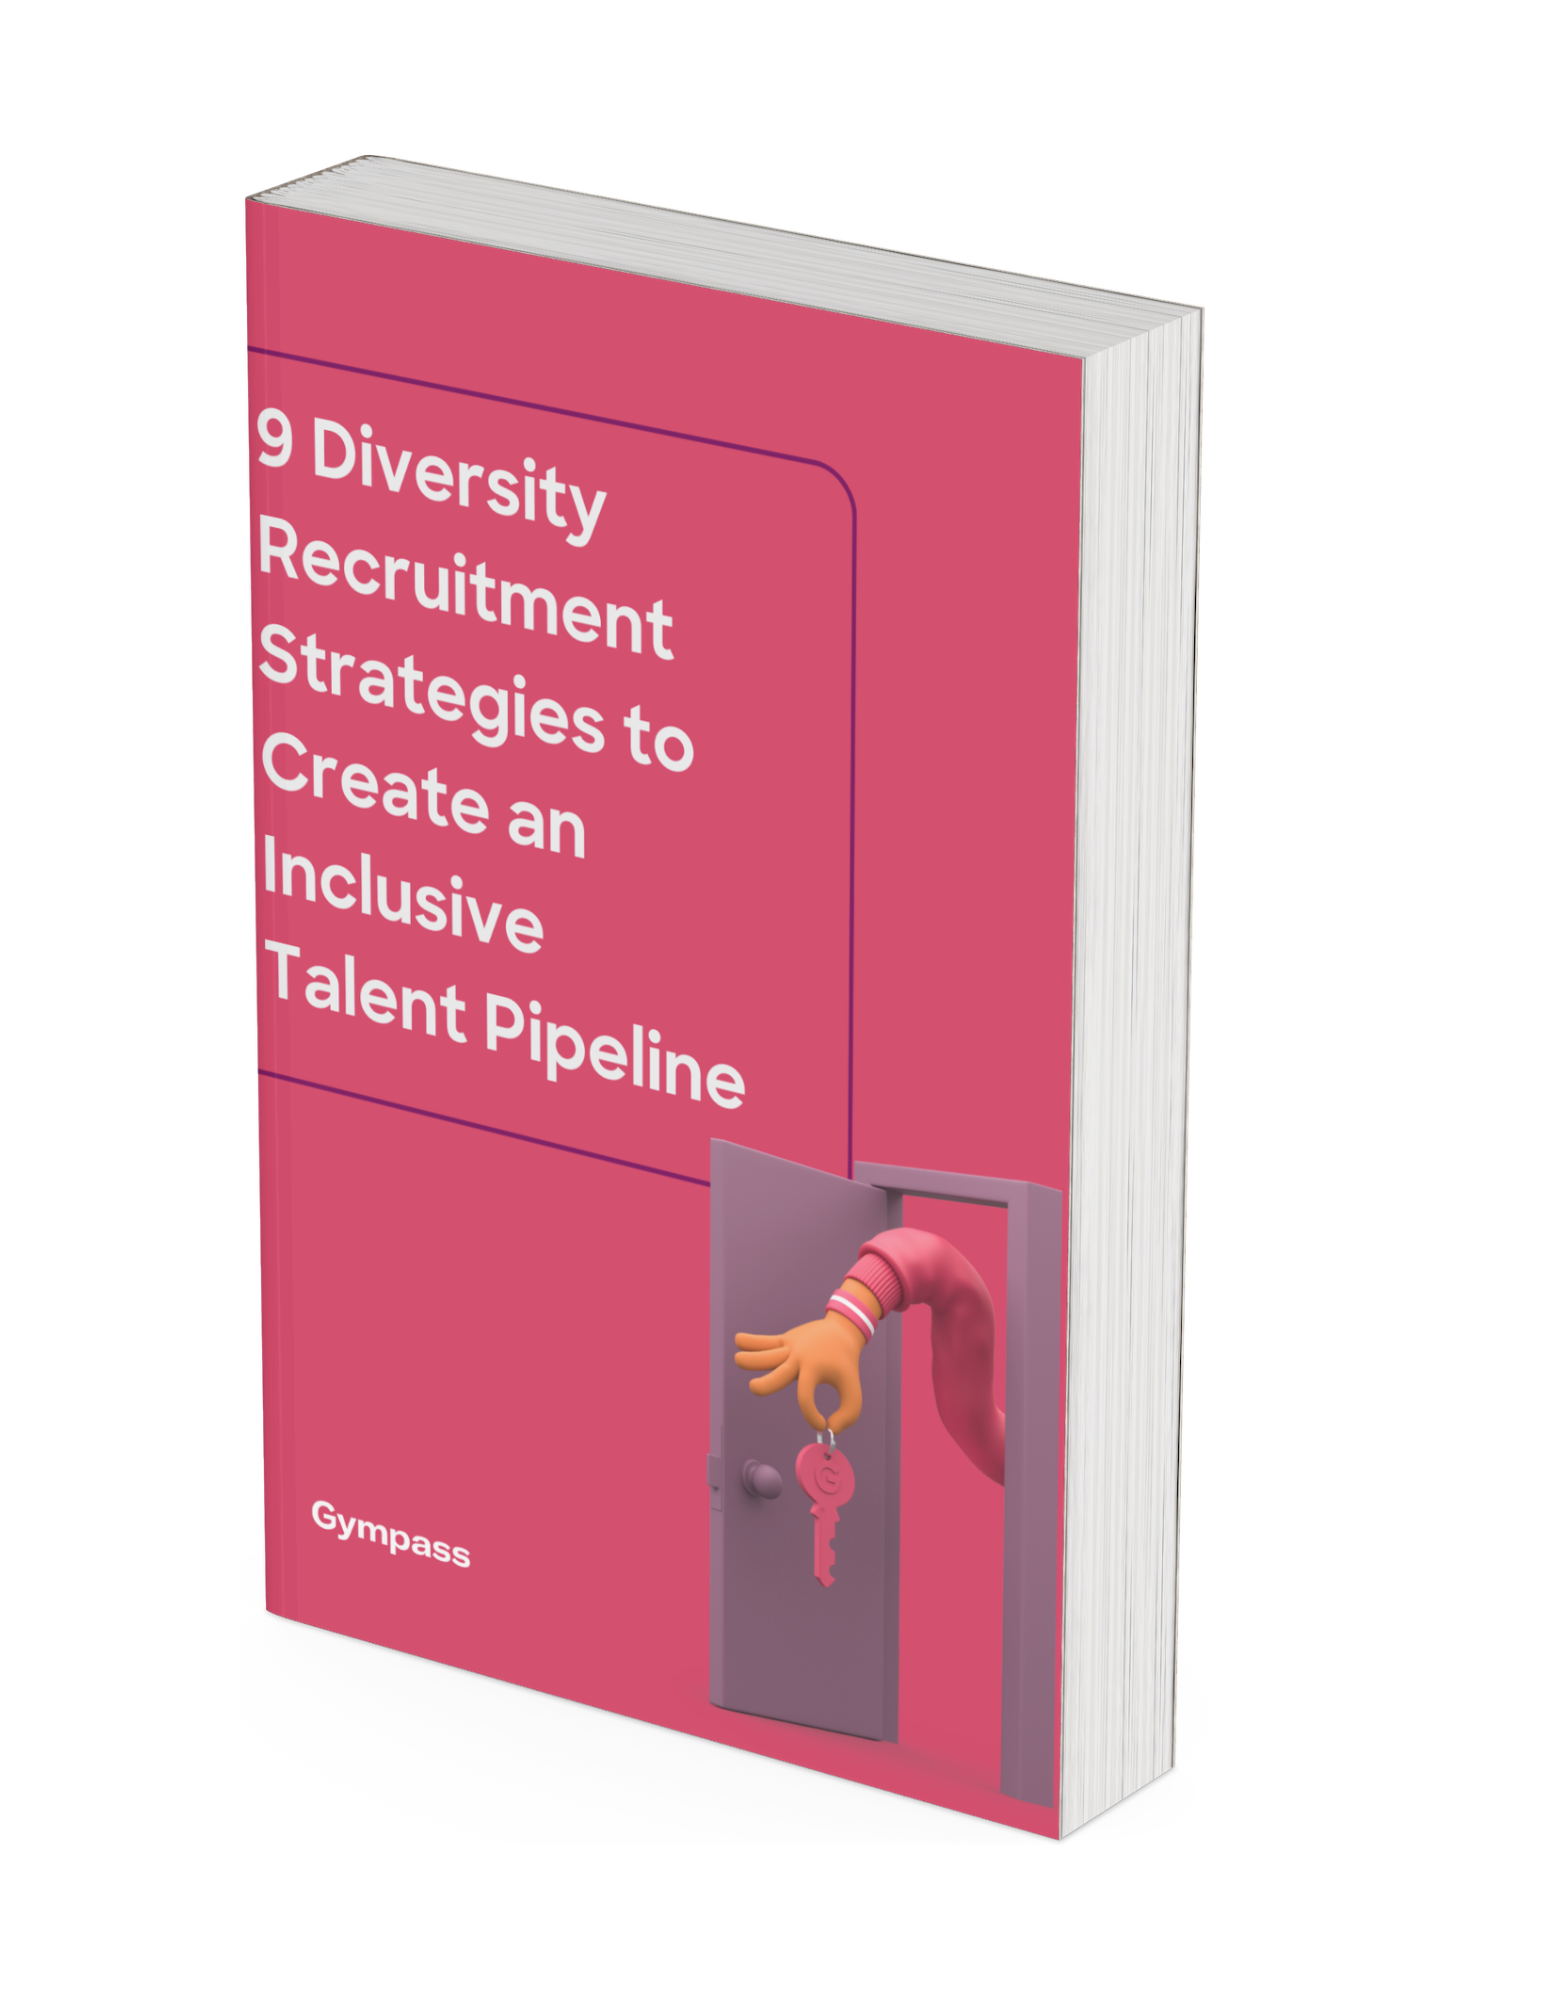 diverse-recruitment-strategies-guide-mockup